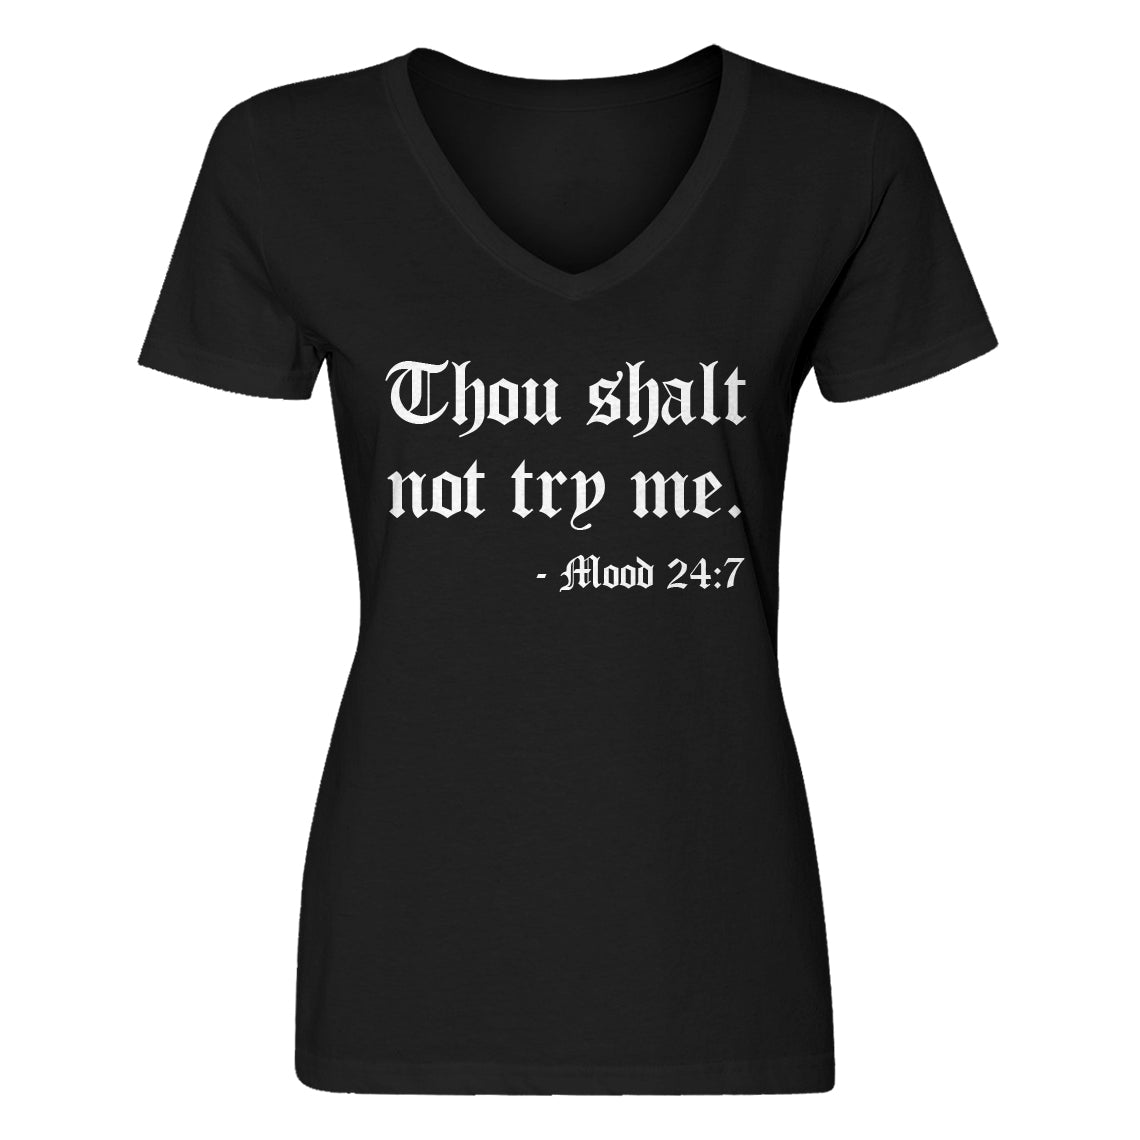 Womens Thou shalt not try me. V-Neck T-shirt